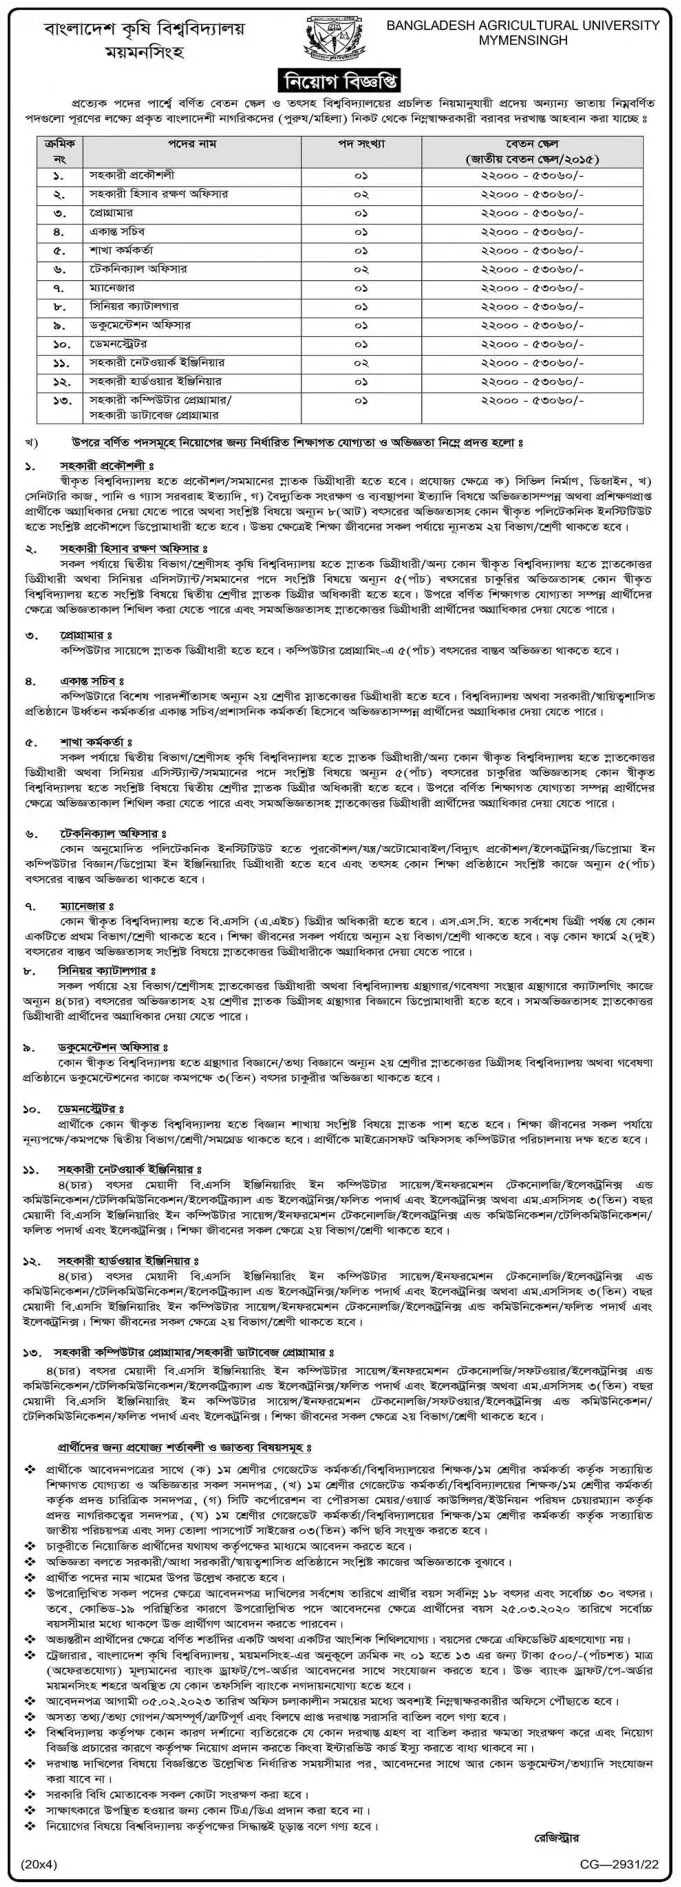 Bangladesh Agricultural University Job Circular